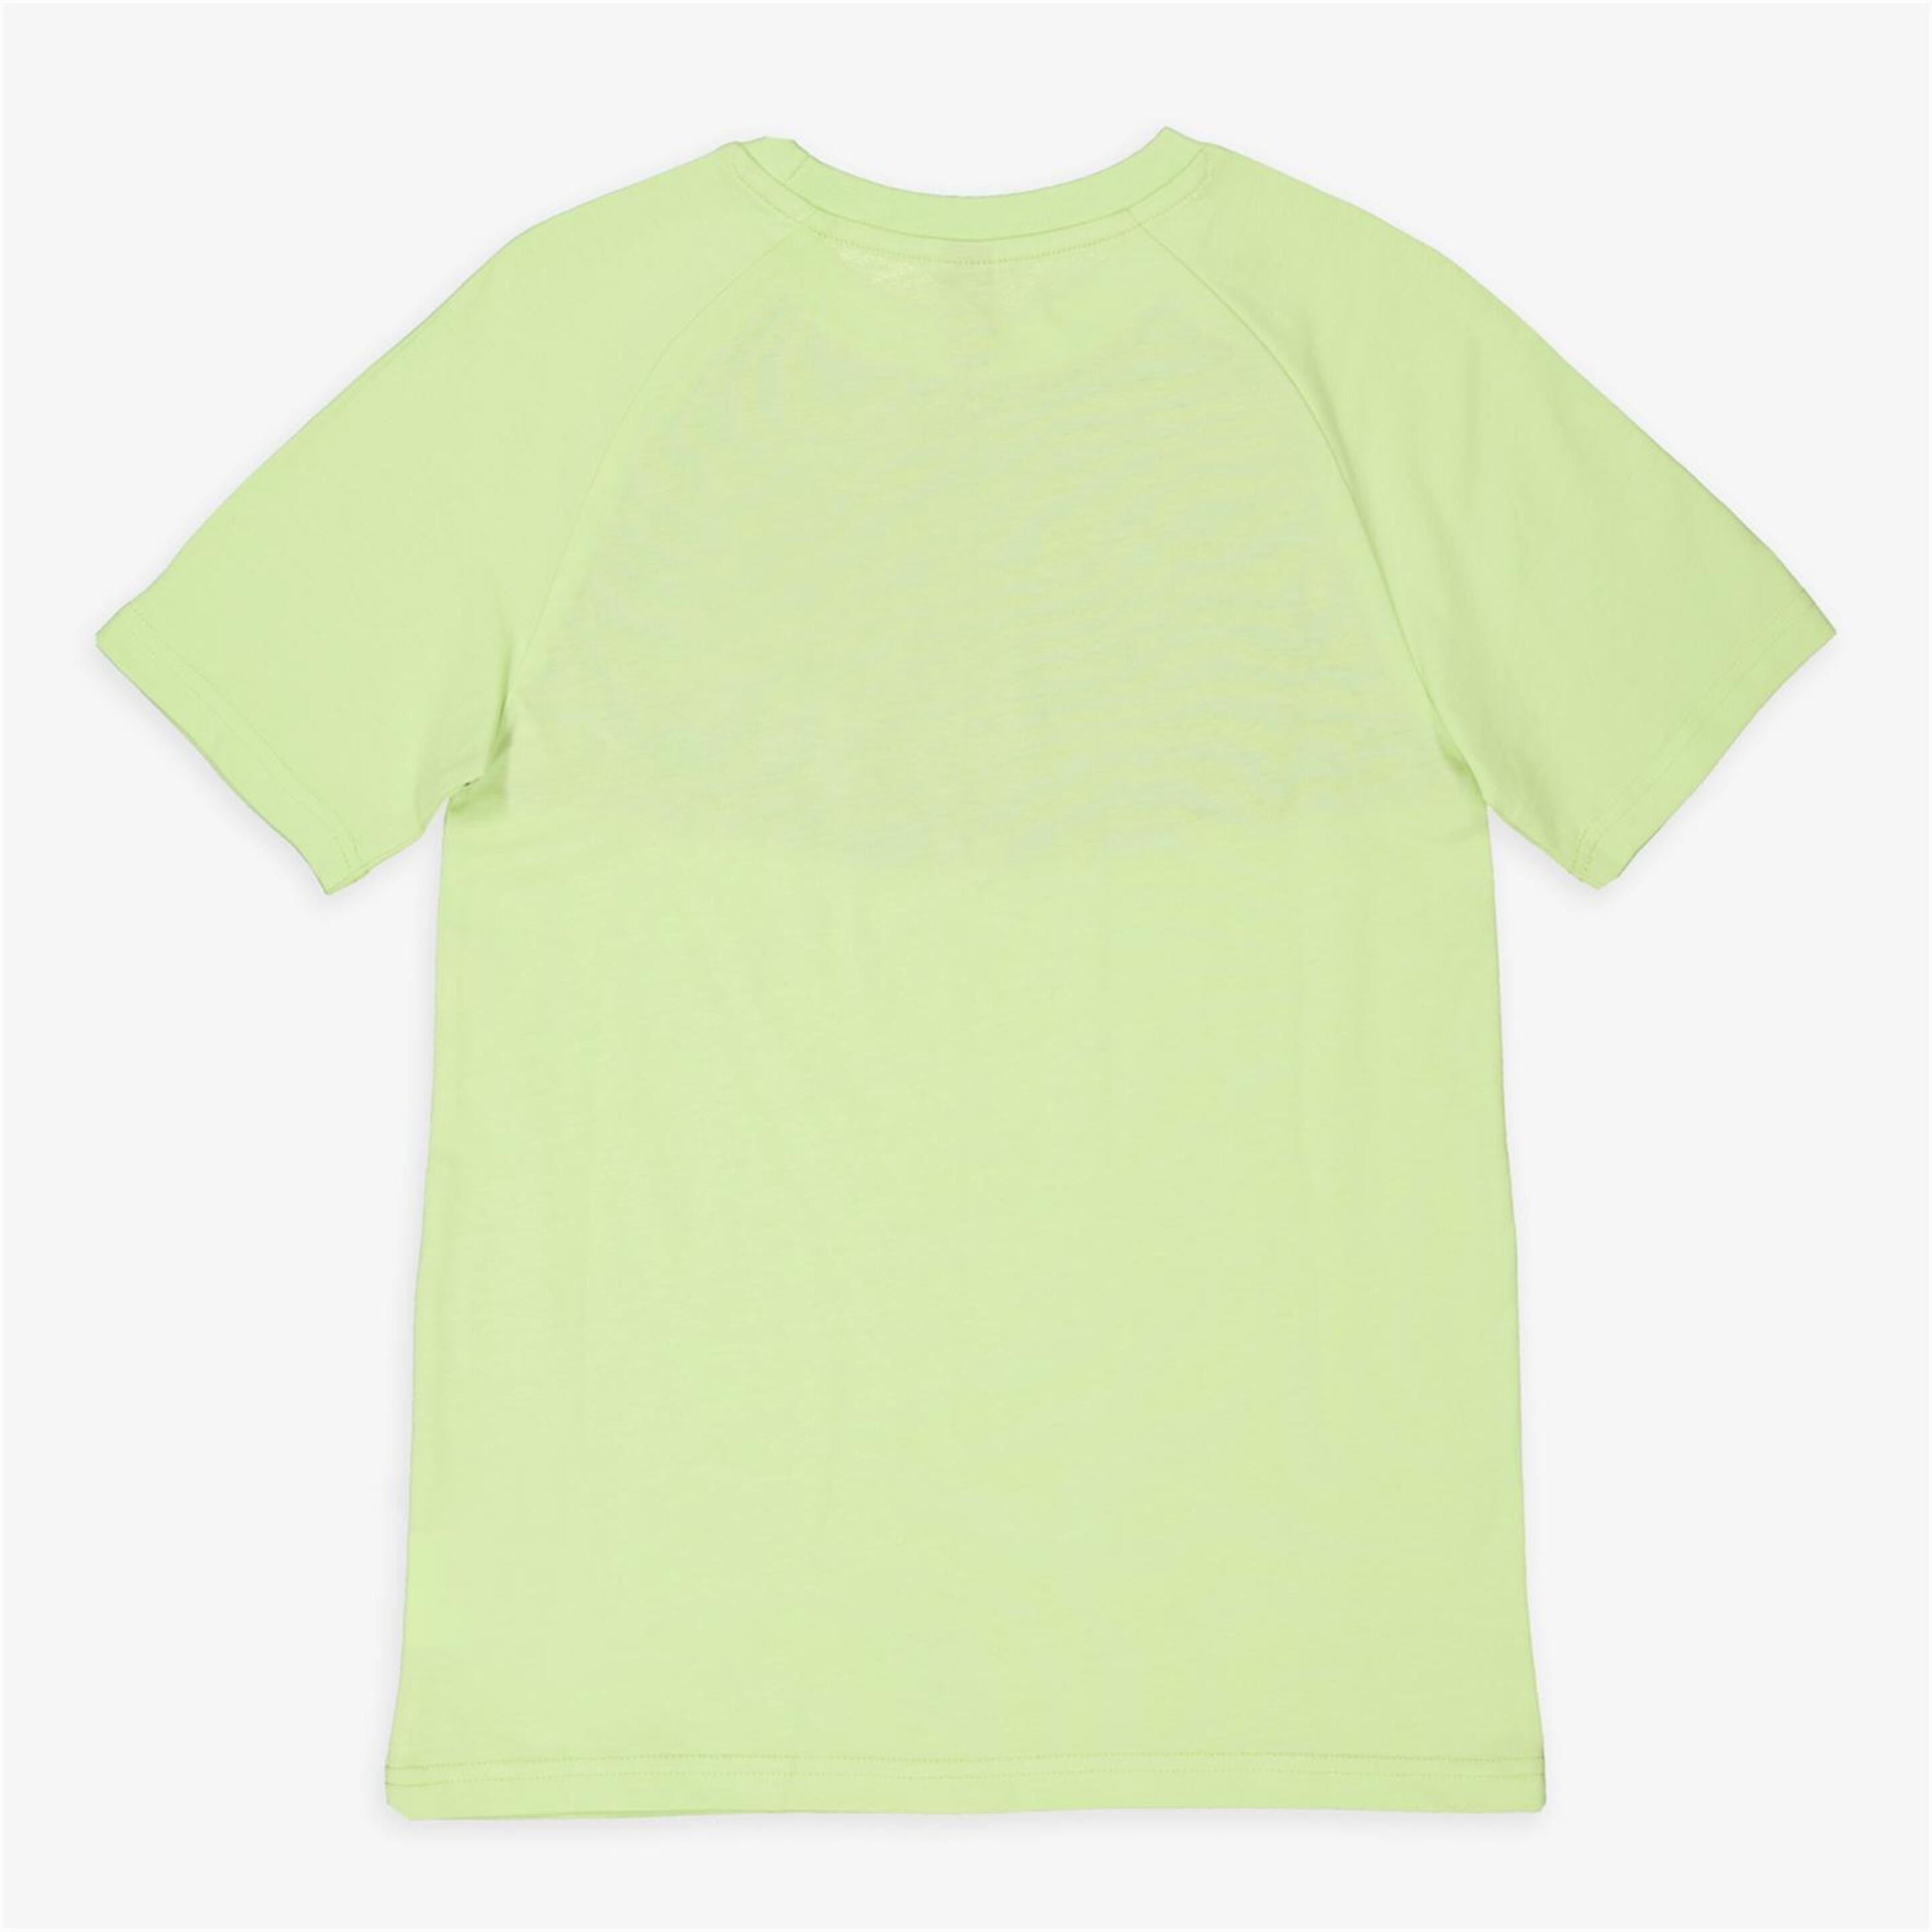 Camiseta Fila - Lima - Camiseta Niño